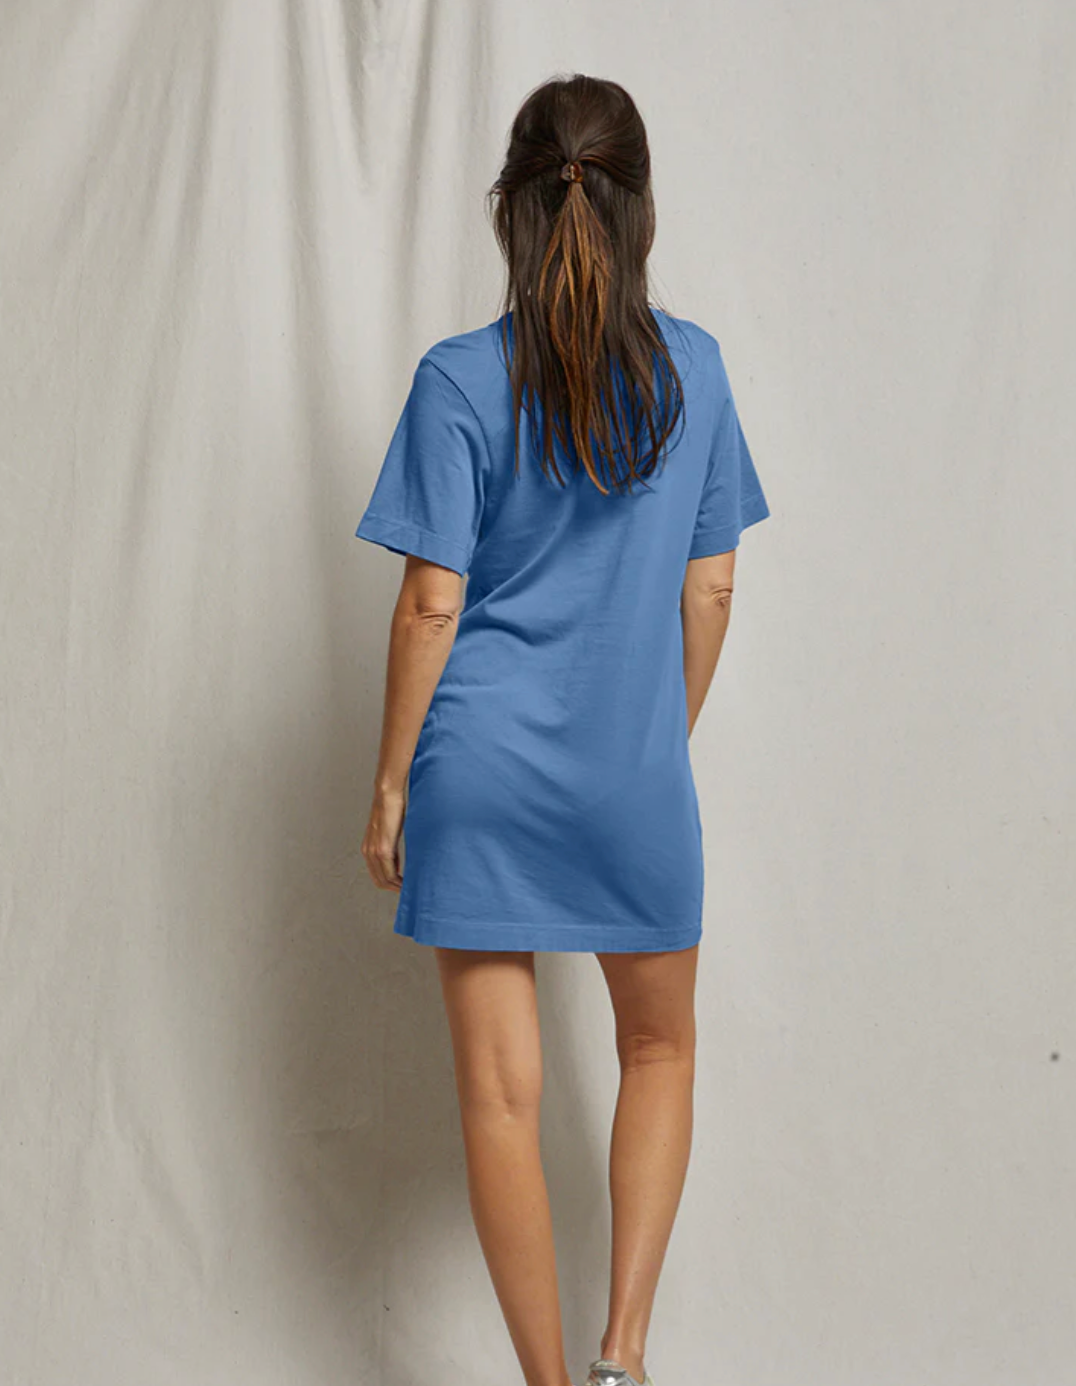 Tiegan Dress - Carolina Blue